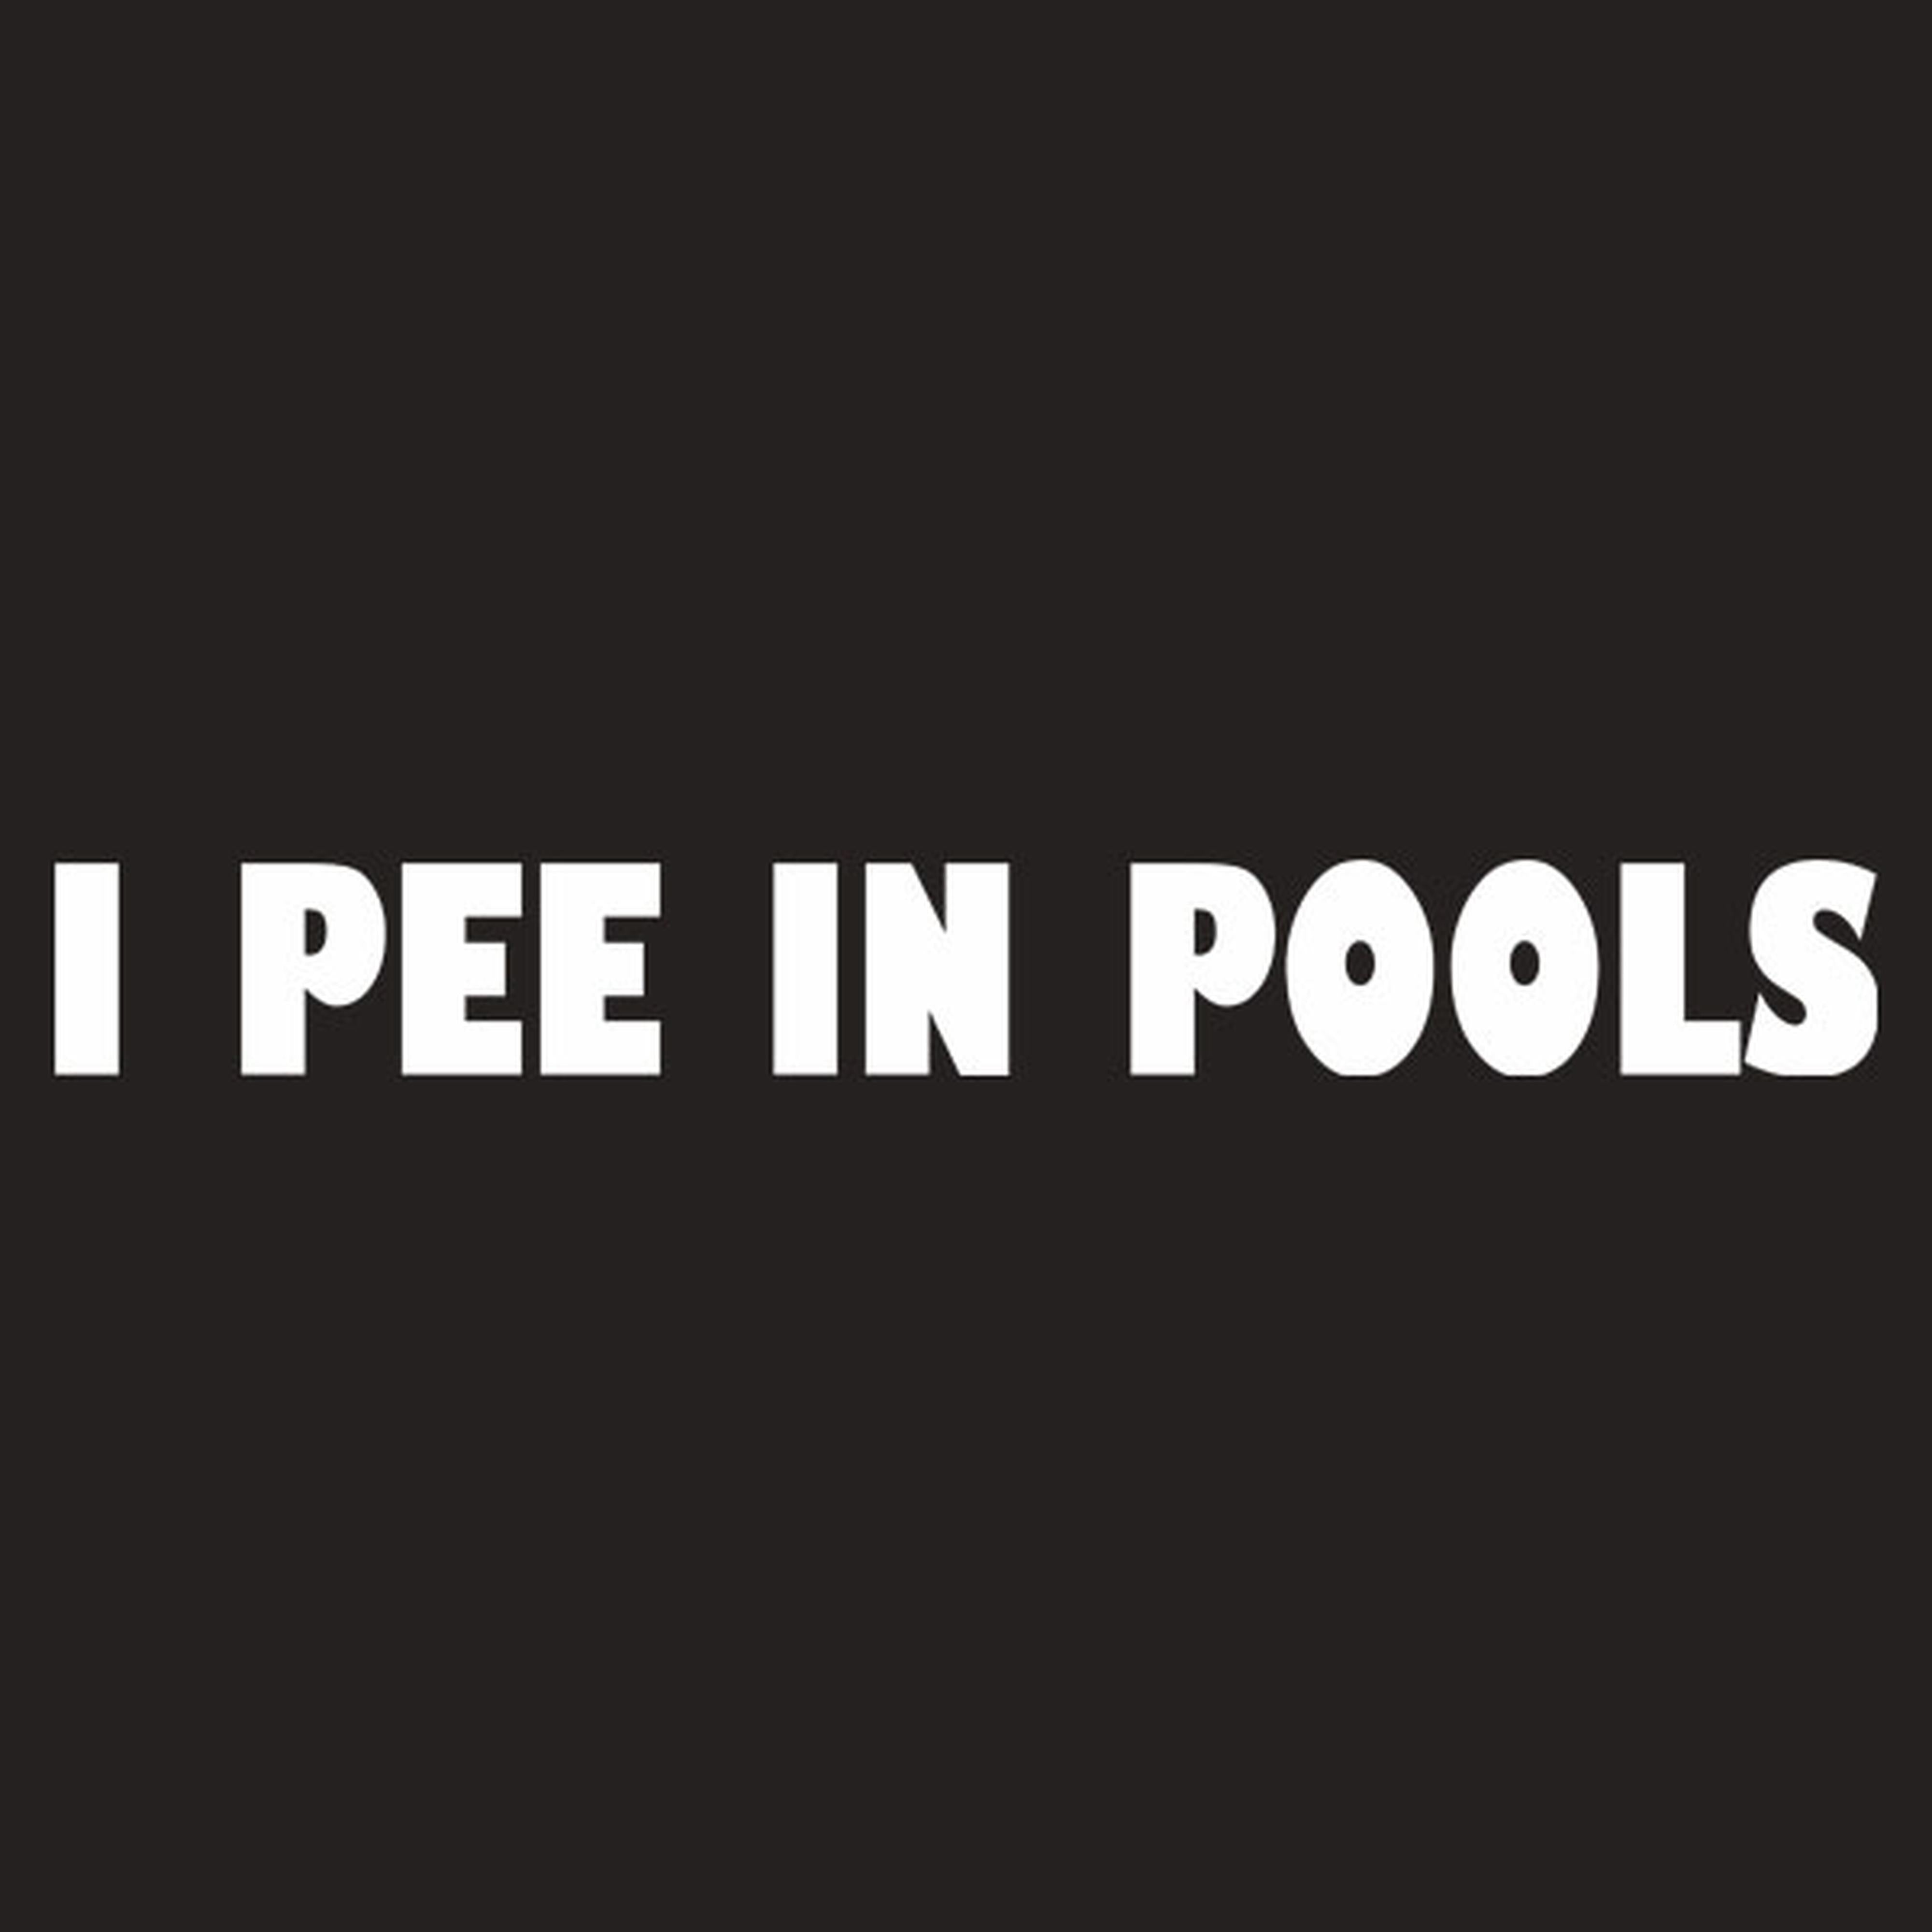 I pee in pools - T-shirt